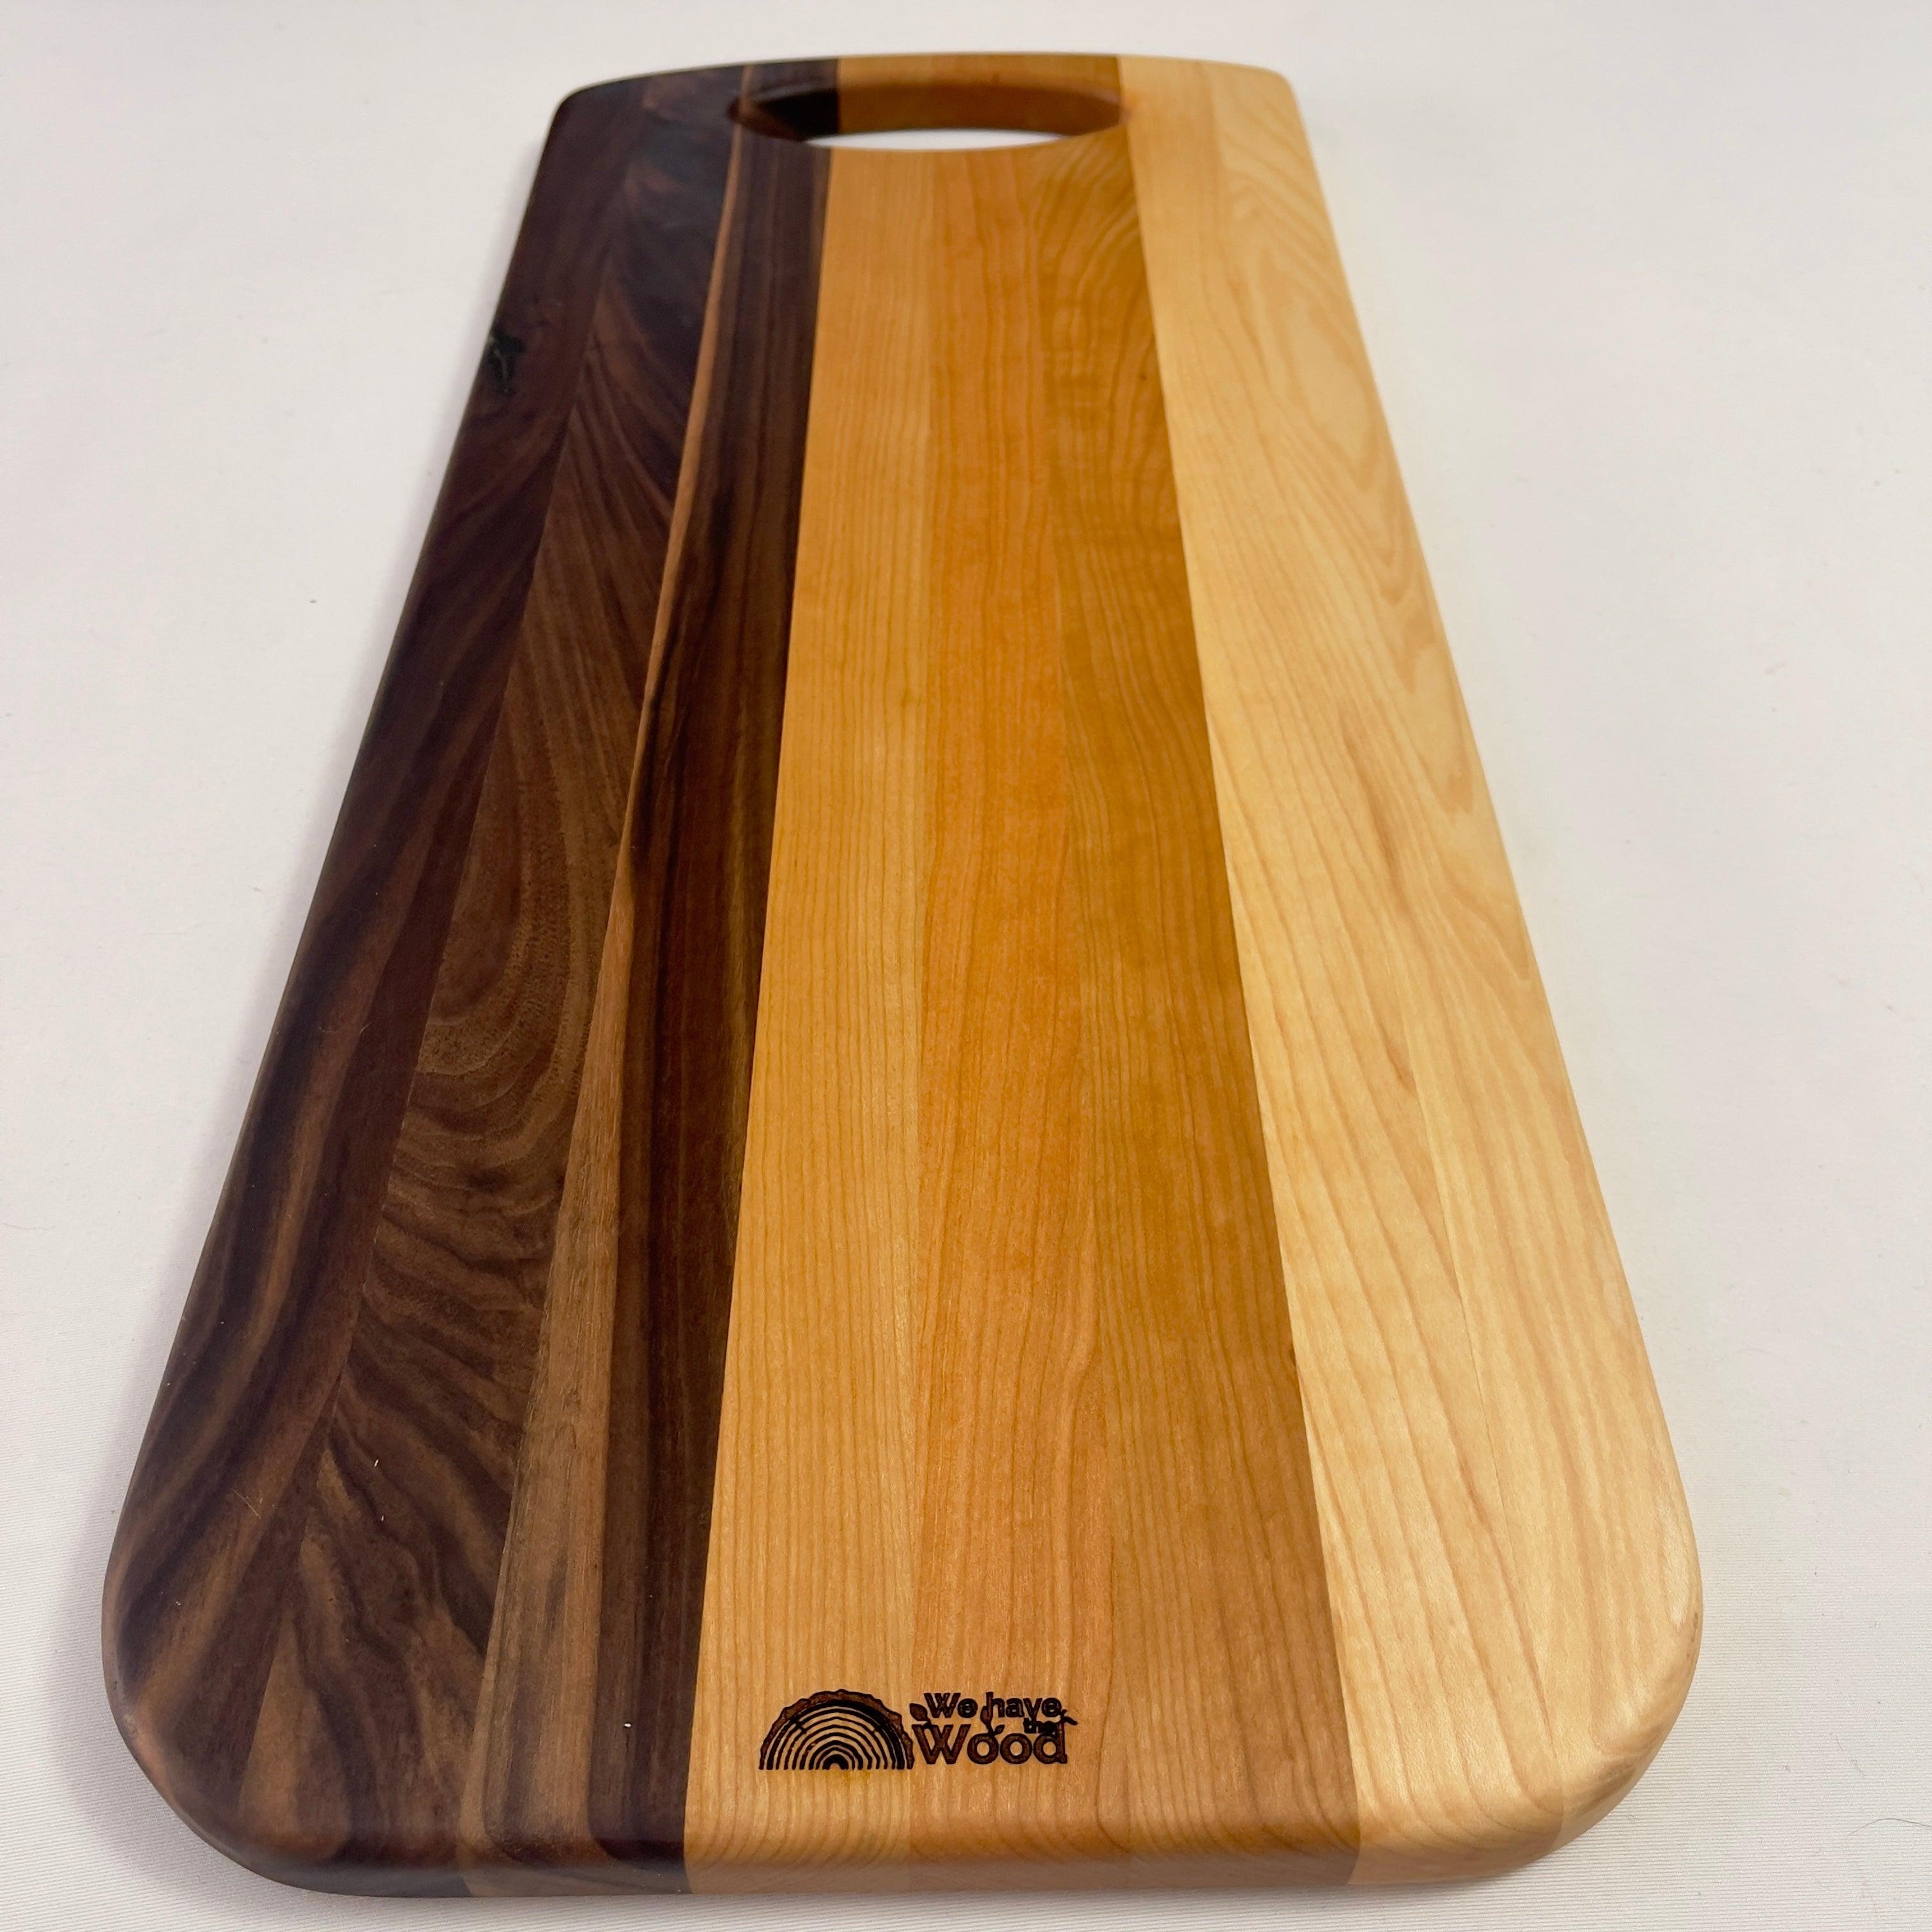 Custom Lakeboard - We have the wood